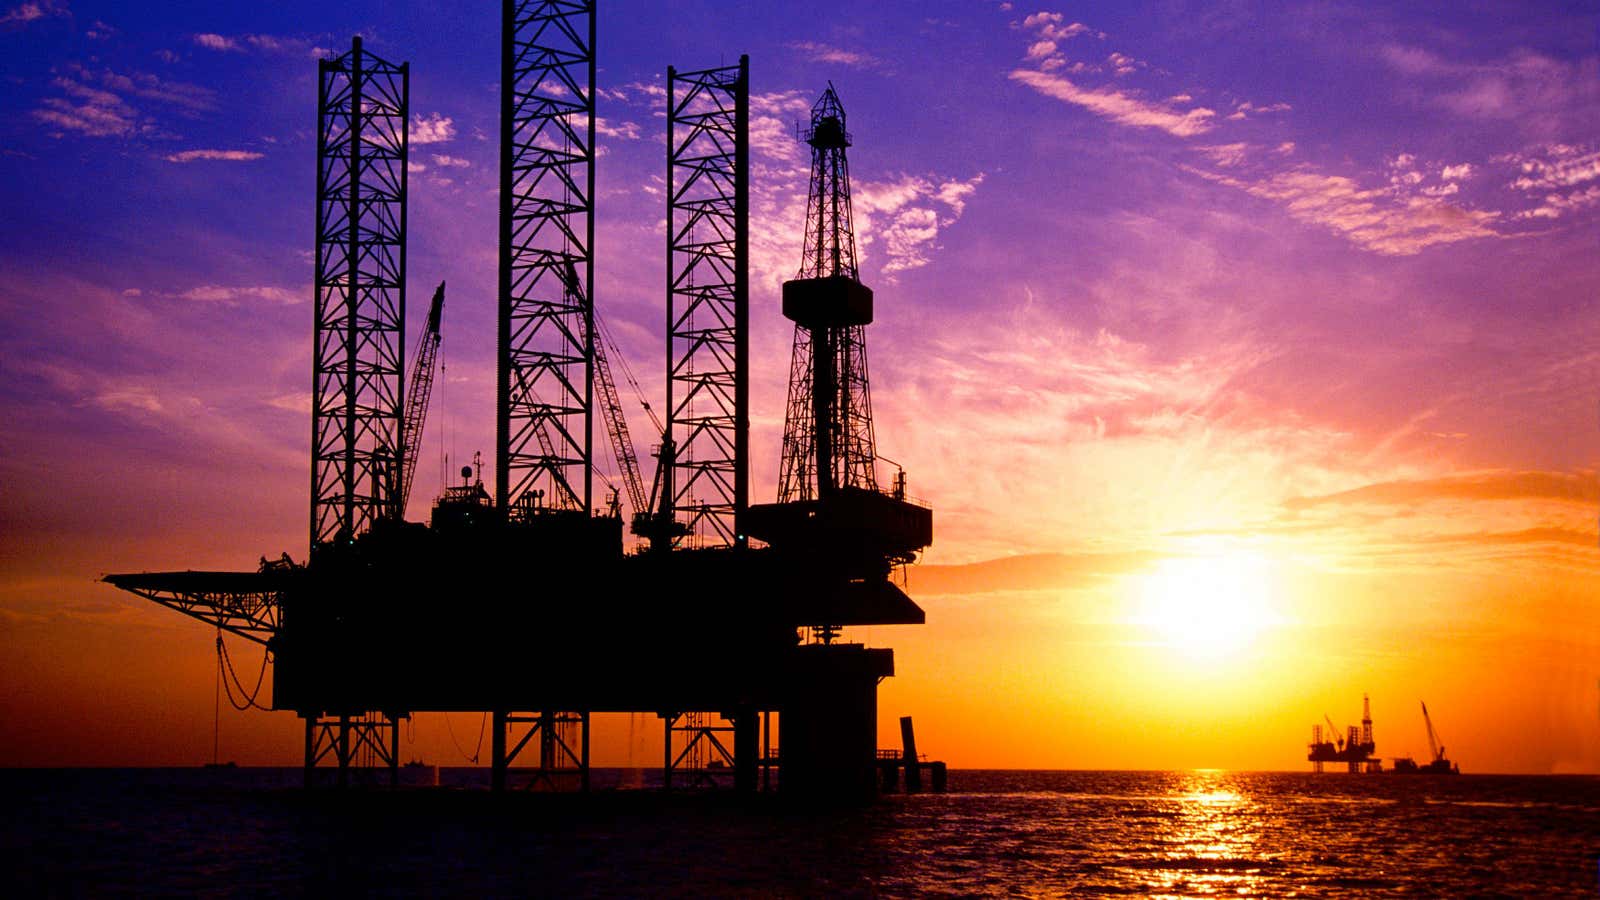 The promise of offshore oil still beckons.